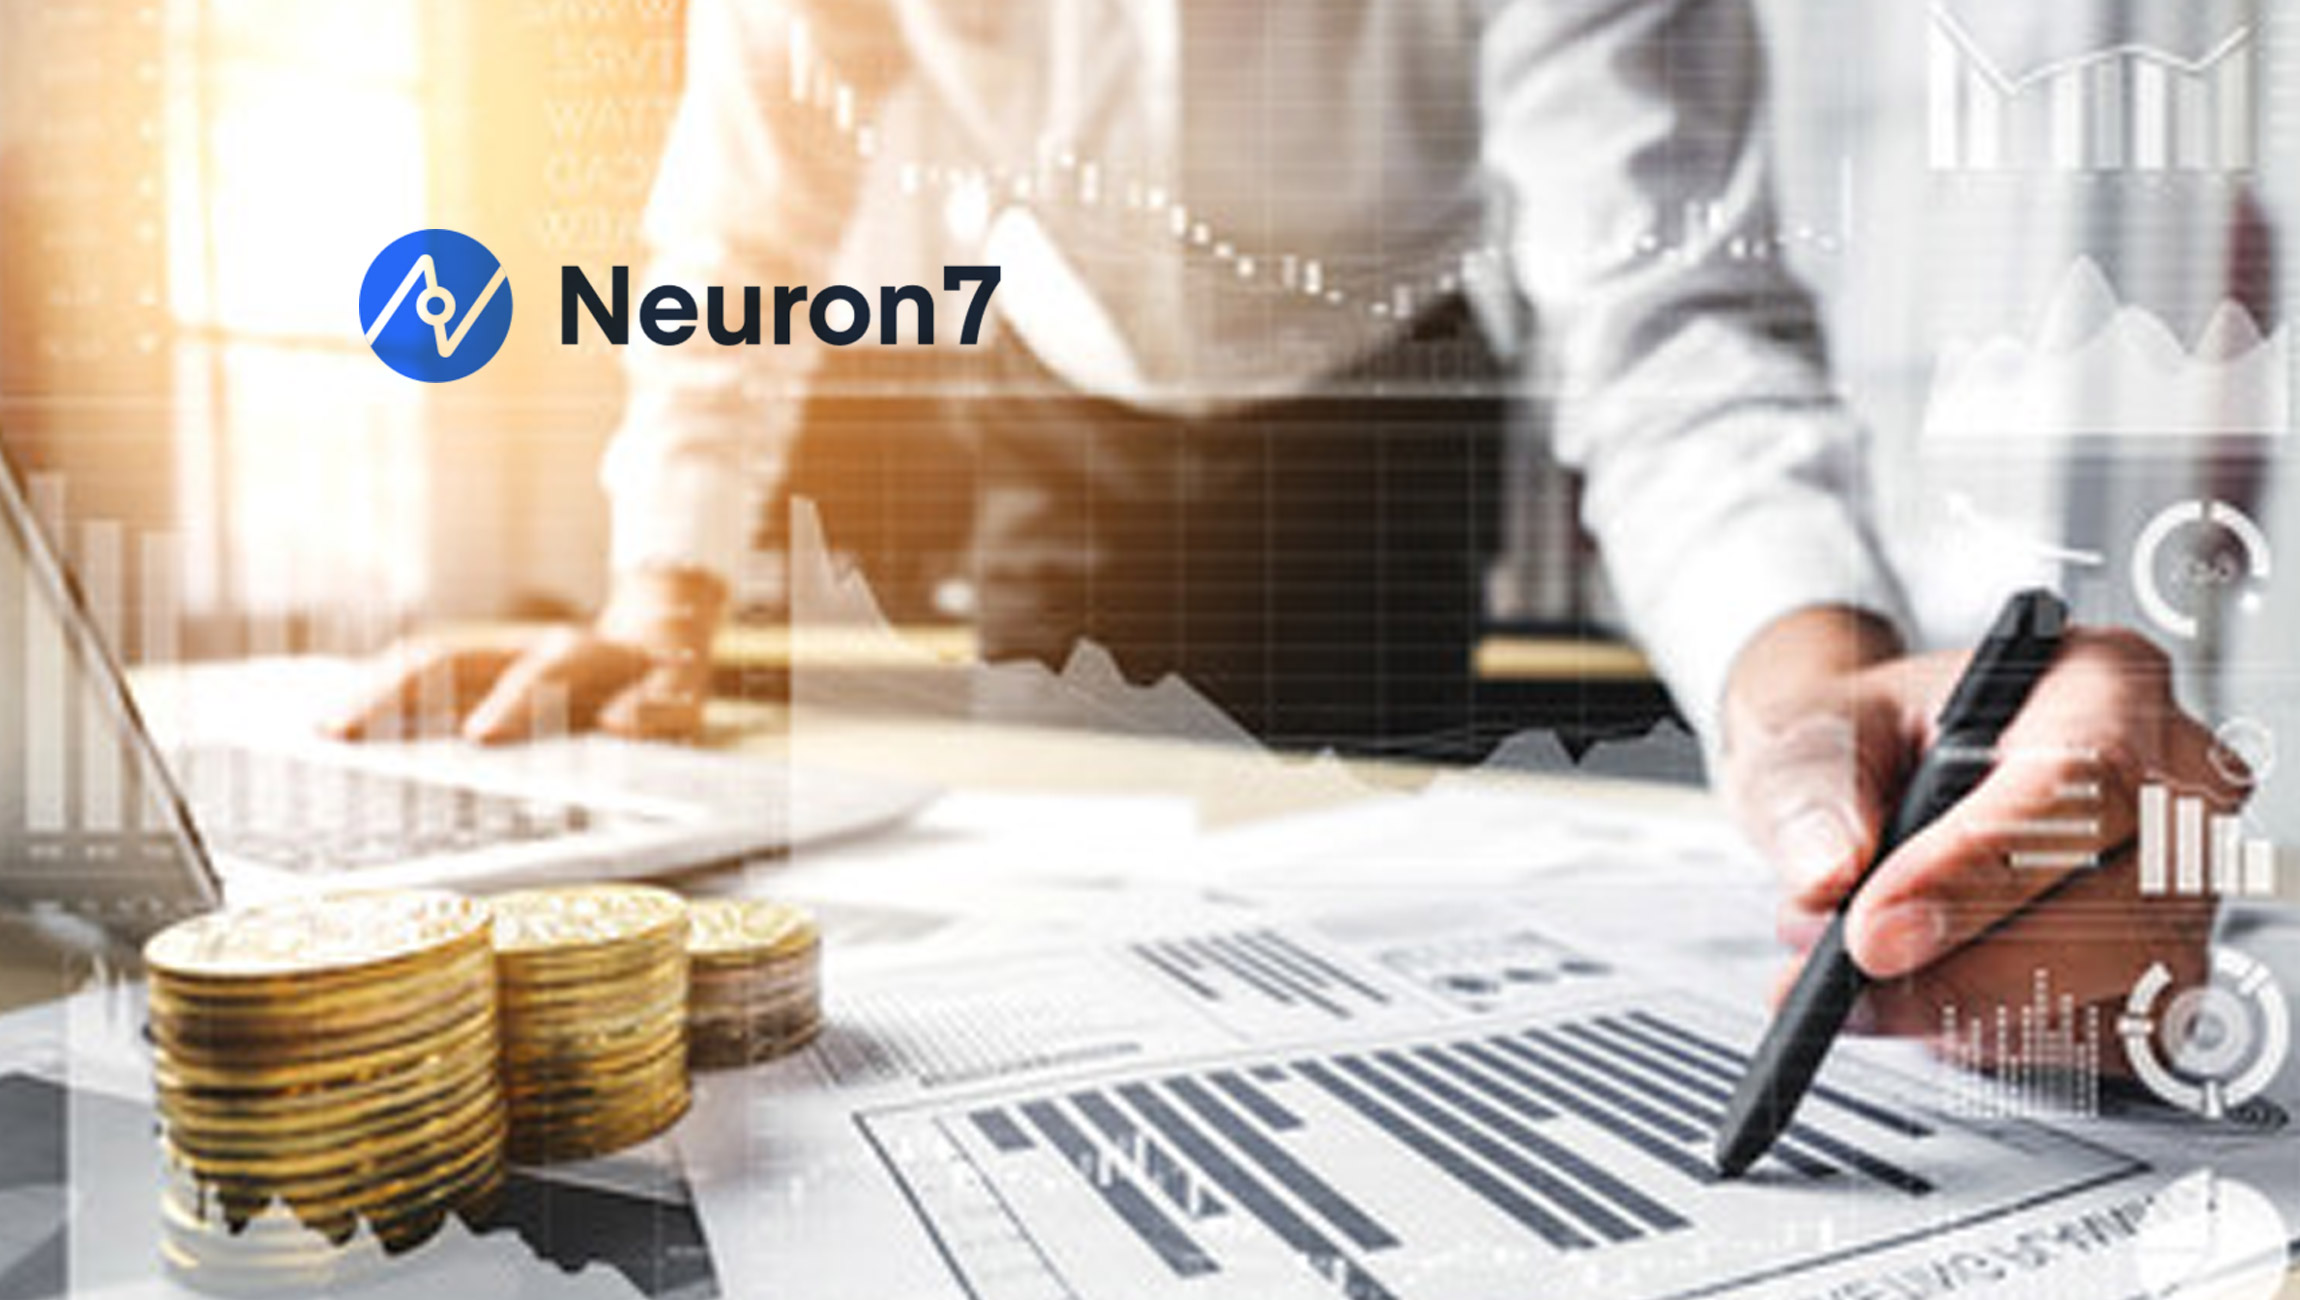 Neuron7 Raises $10 Million Series A Funding to Revolutionize AI-Powered Customer Service